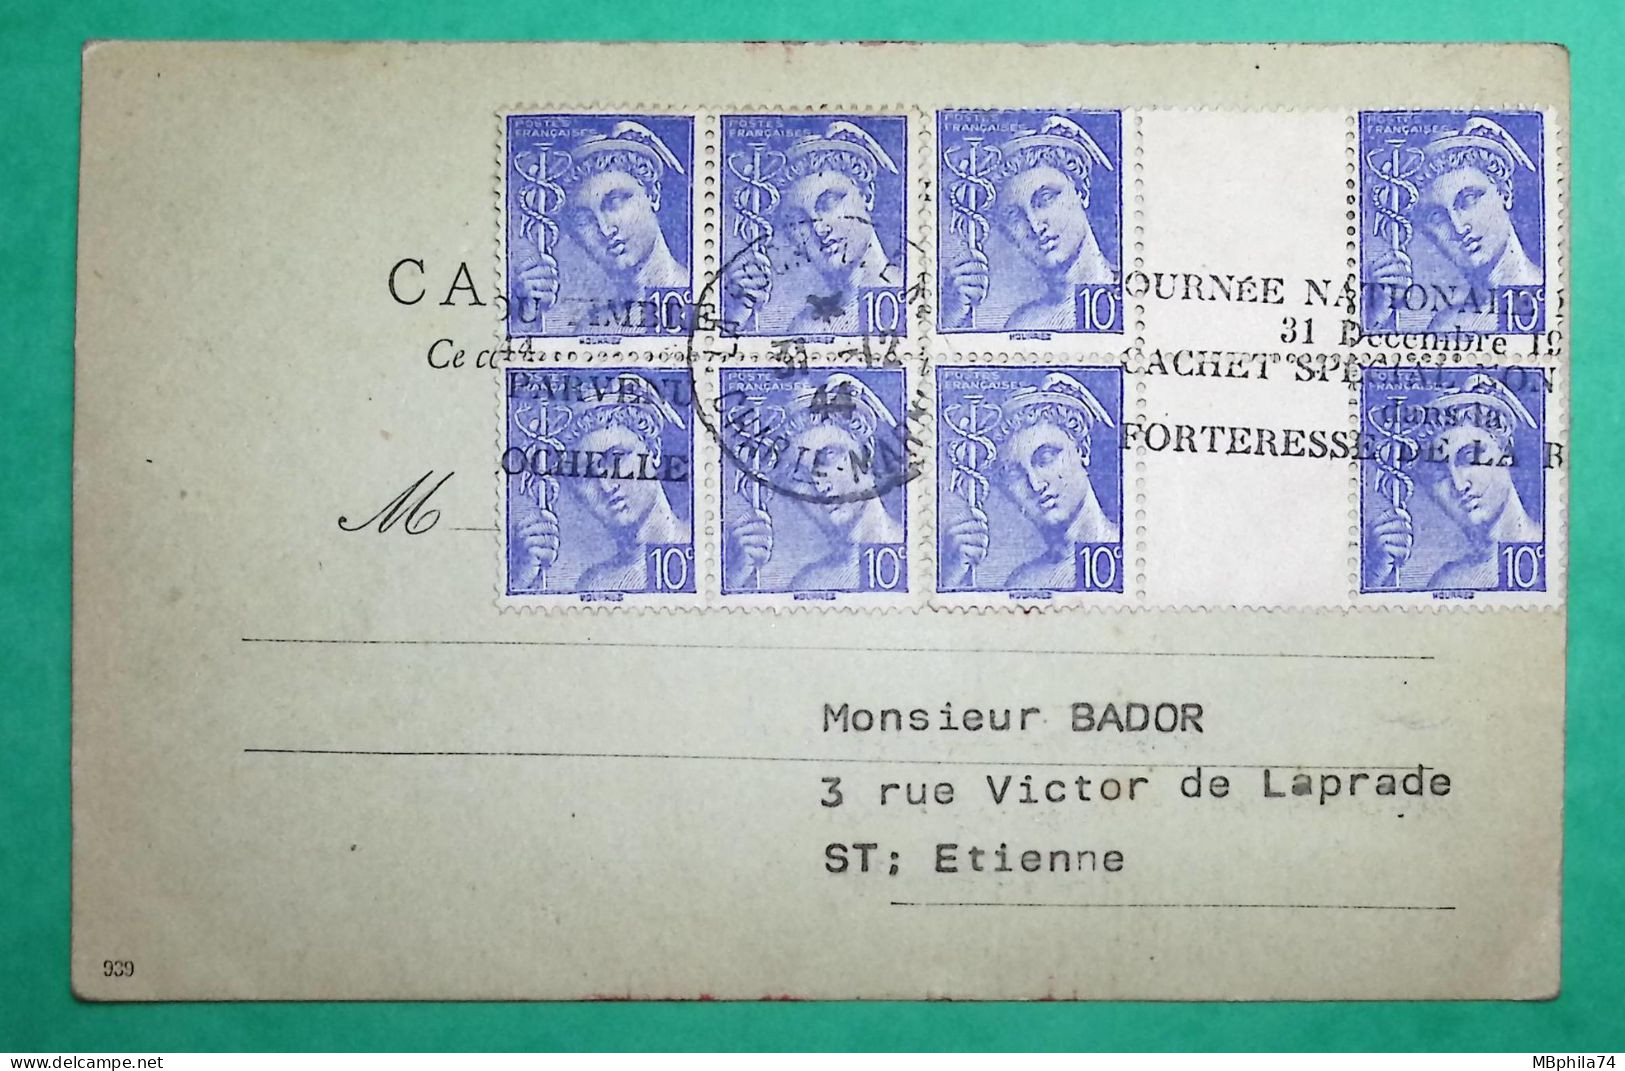 N°546 BLOC DE 8 INTERPANNEAU MERCURE SURCHARGE JOURNEE NATIONALE CACHET SPECIAL FORTERESSE DE LA ROCHELLE 1944 WW2 - 1938-42 Mercure